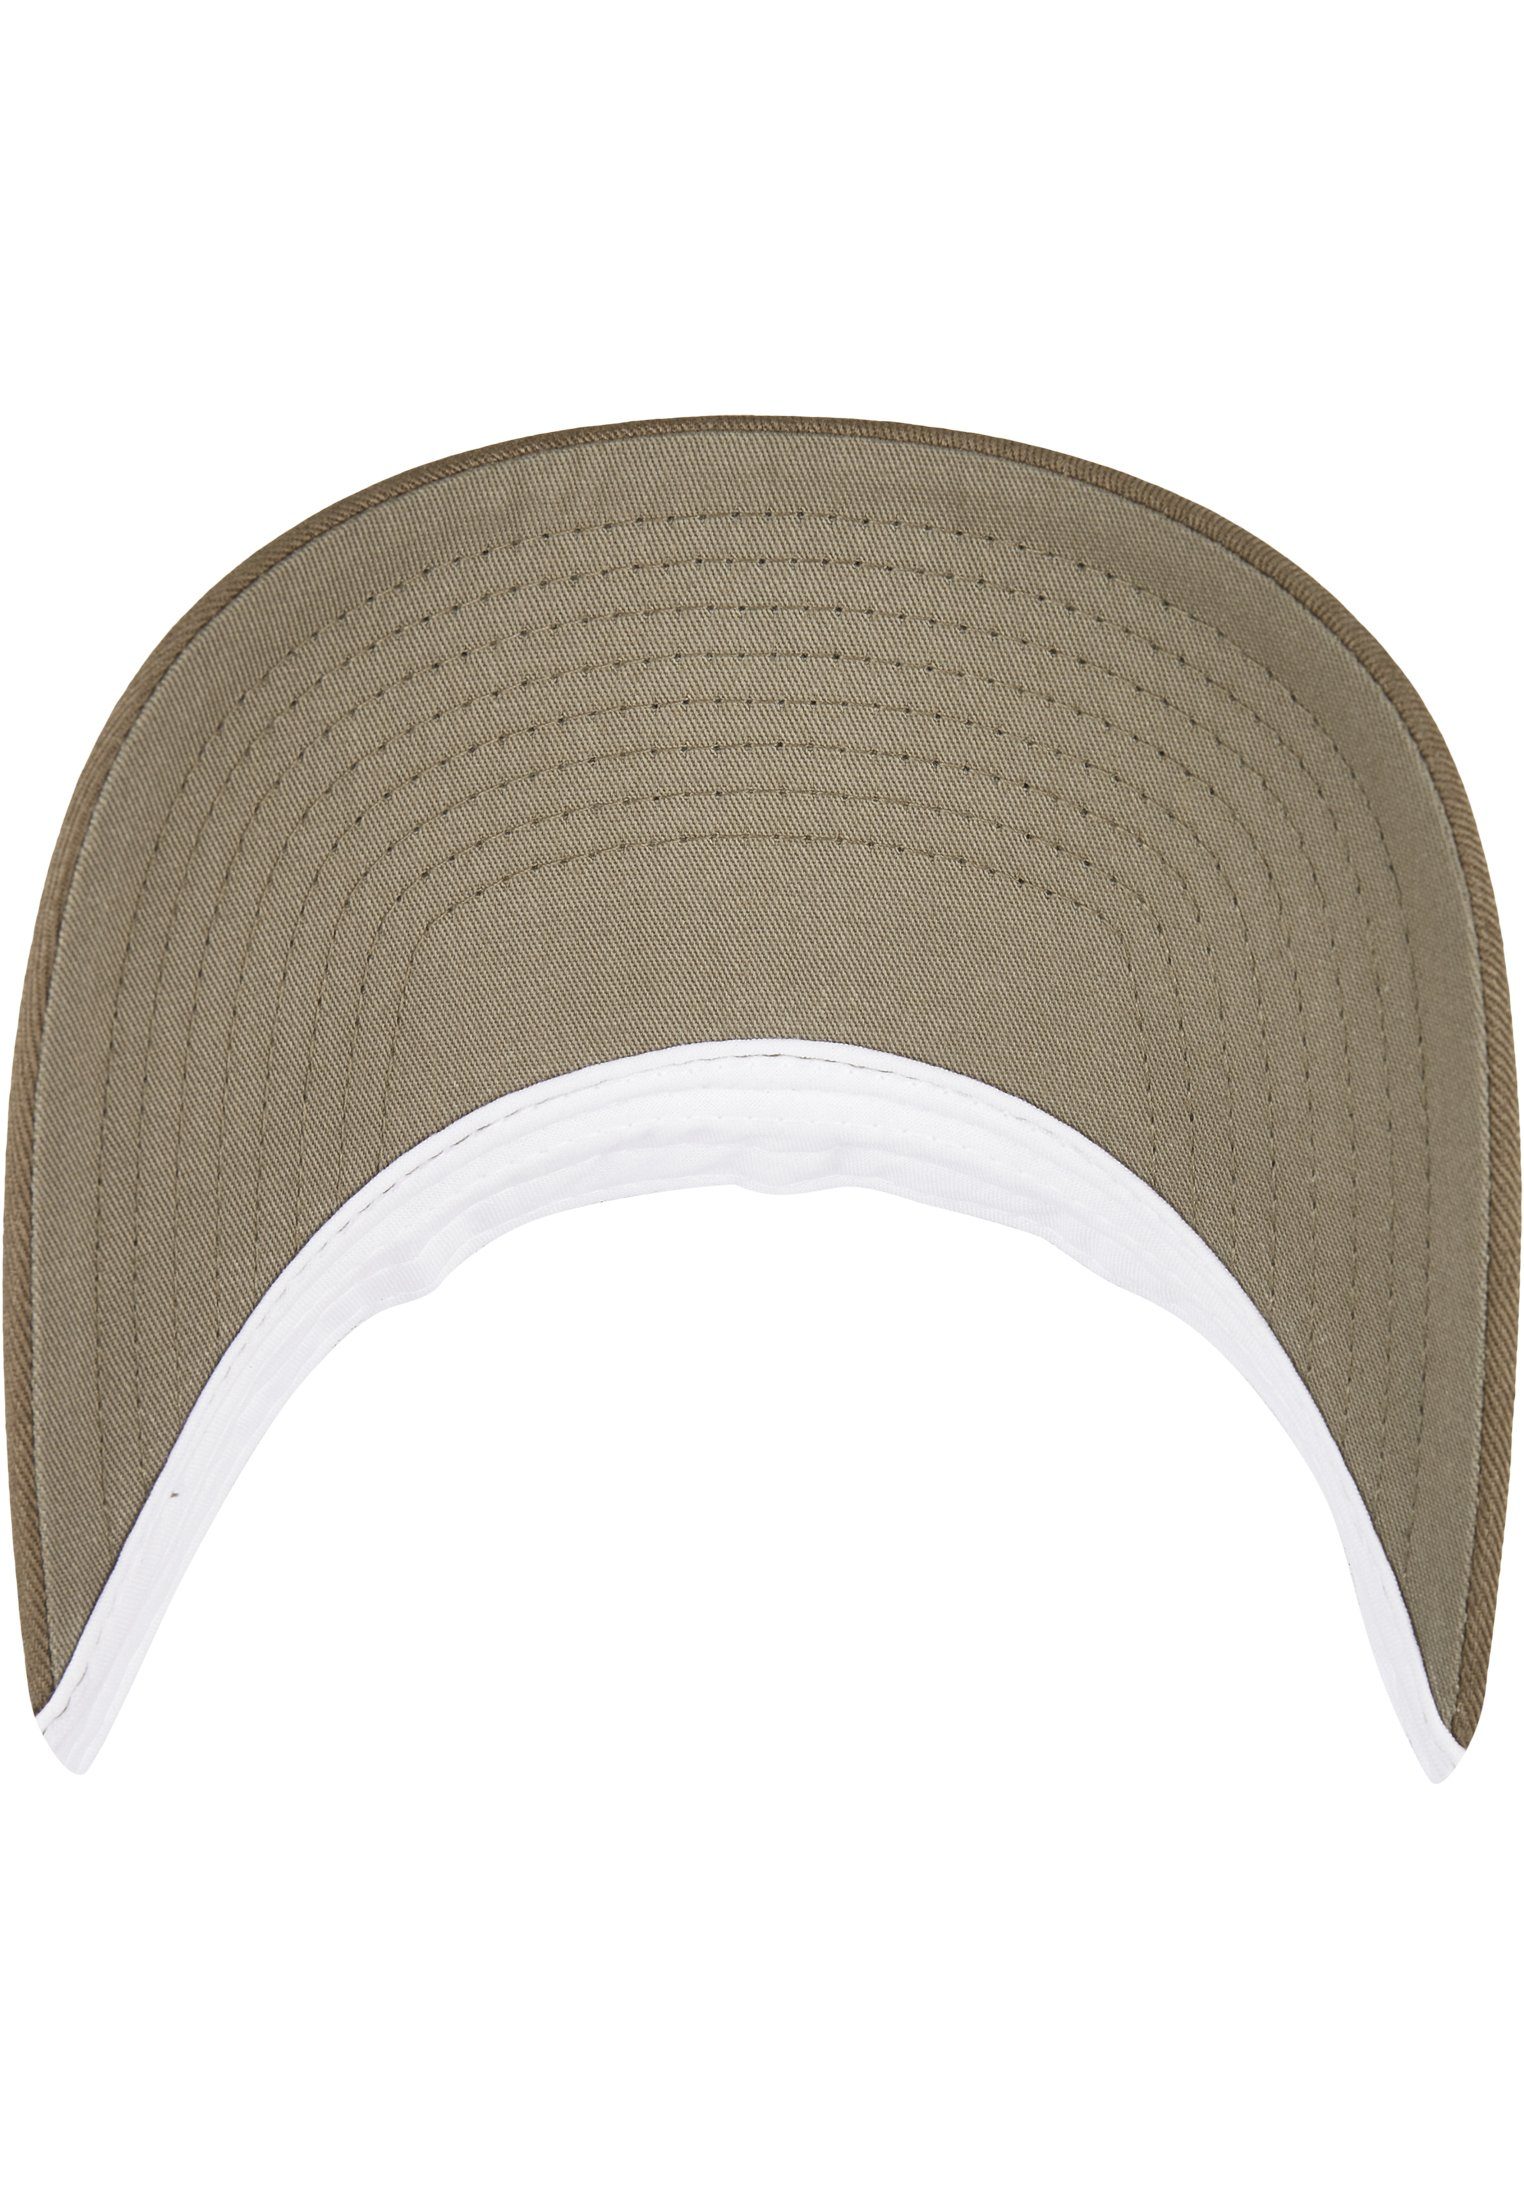 Flexfit Flex CAP TRUCKER Caps Cap CLASSICS 2-TONE YP olive/white RETRO RECYCLED